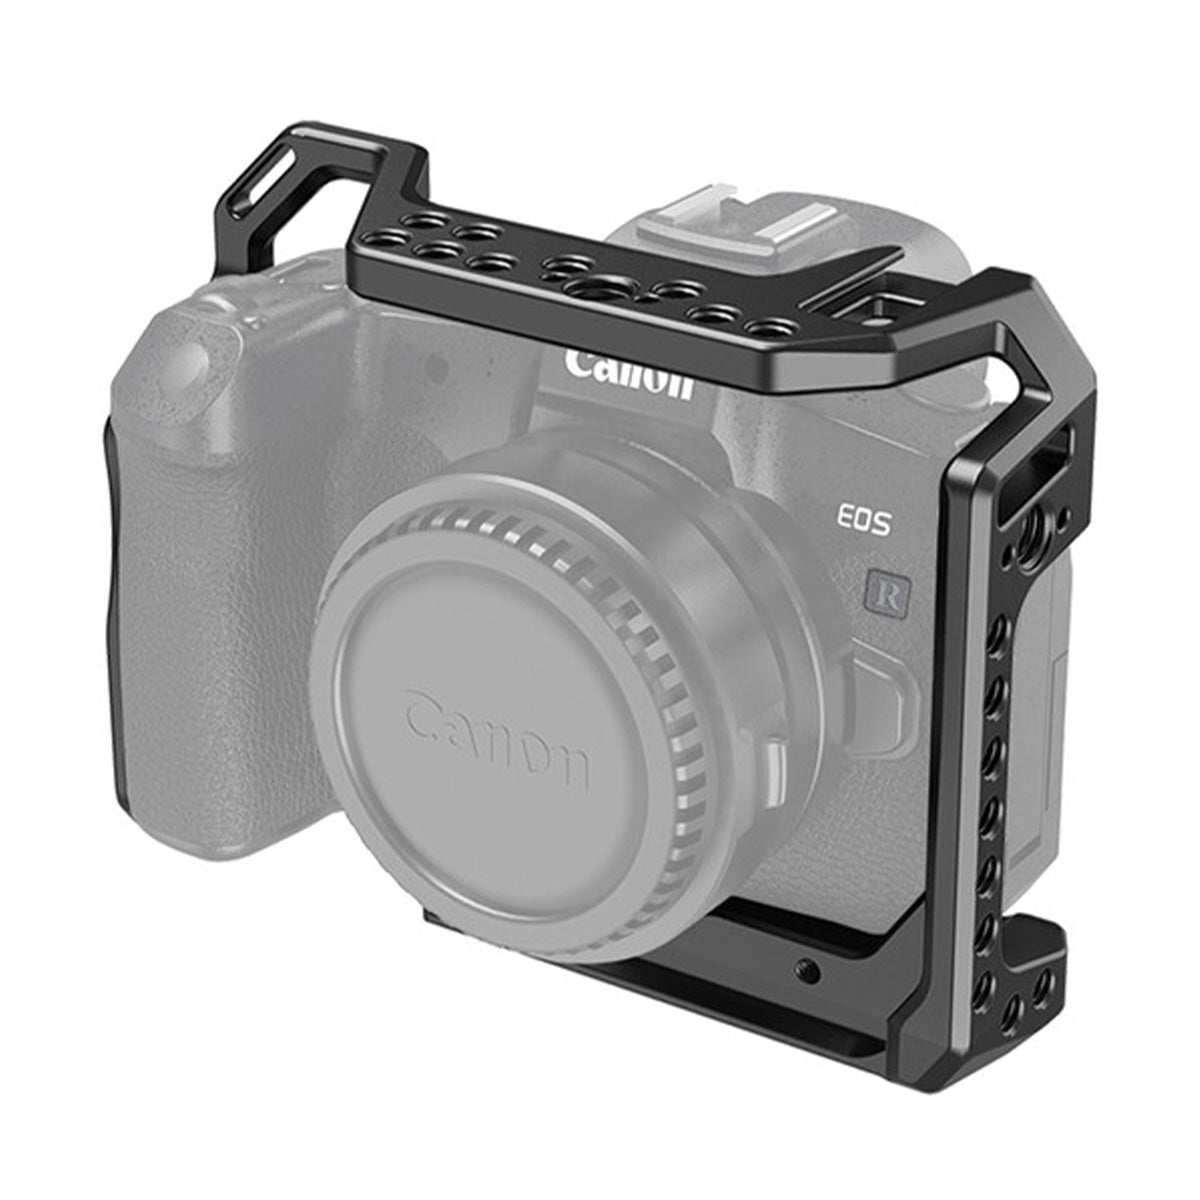 Smallrig Cage for Canon EOS R